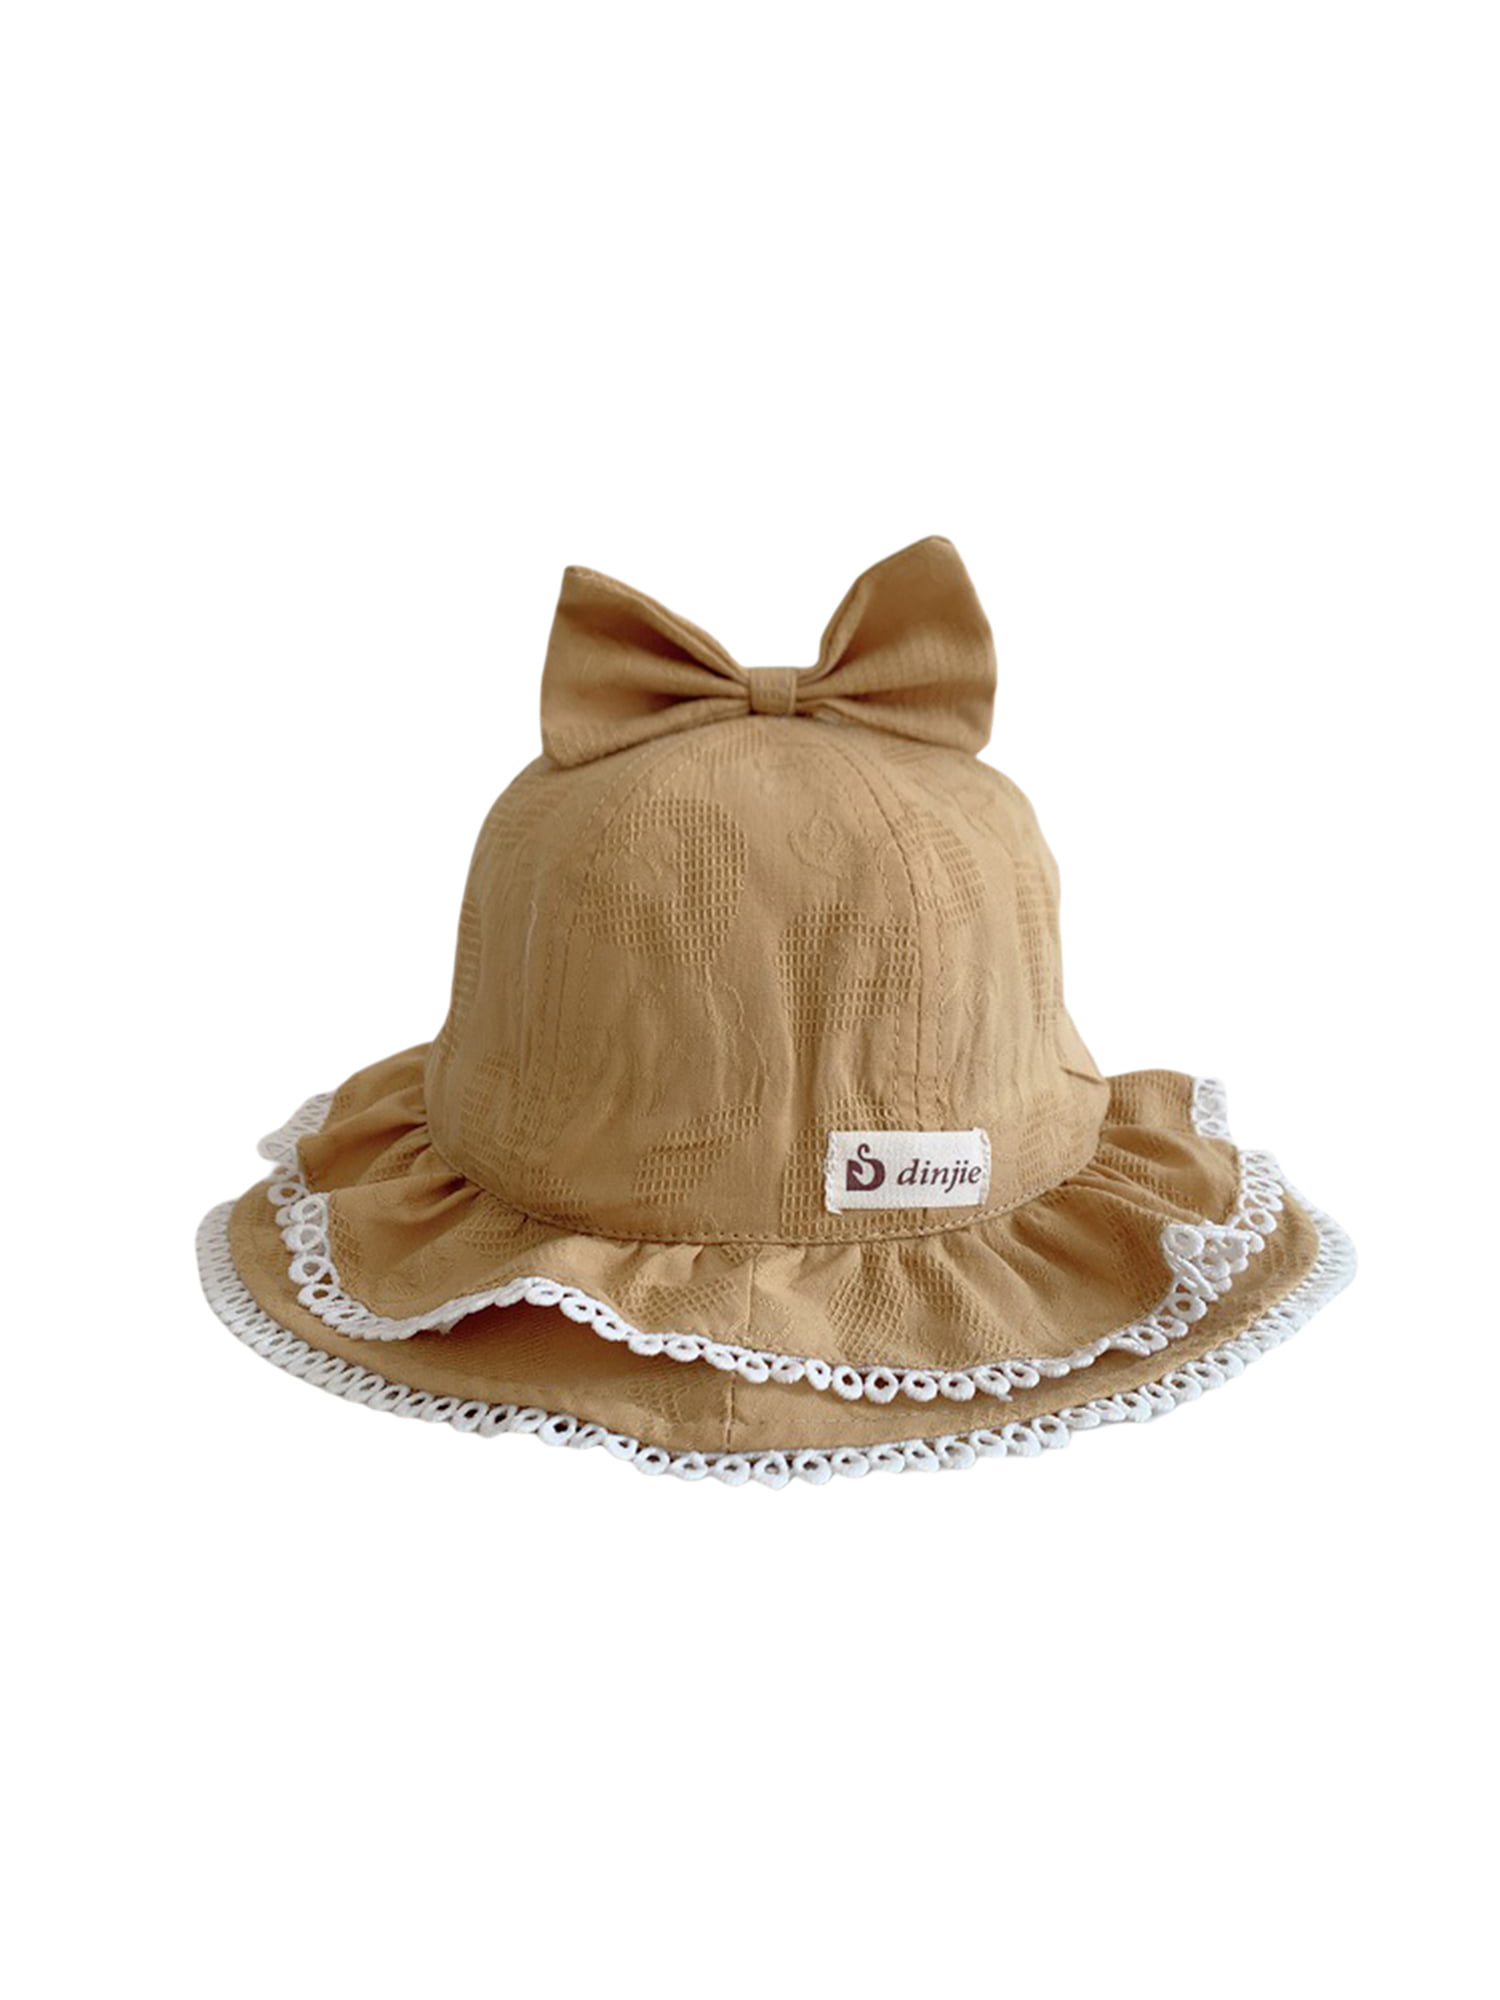 Baby Kids Girls Summer Sun Hat Cute Bow Knot Striped Beach Hat Wide Brim Bucket